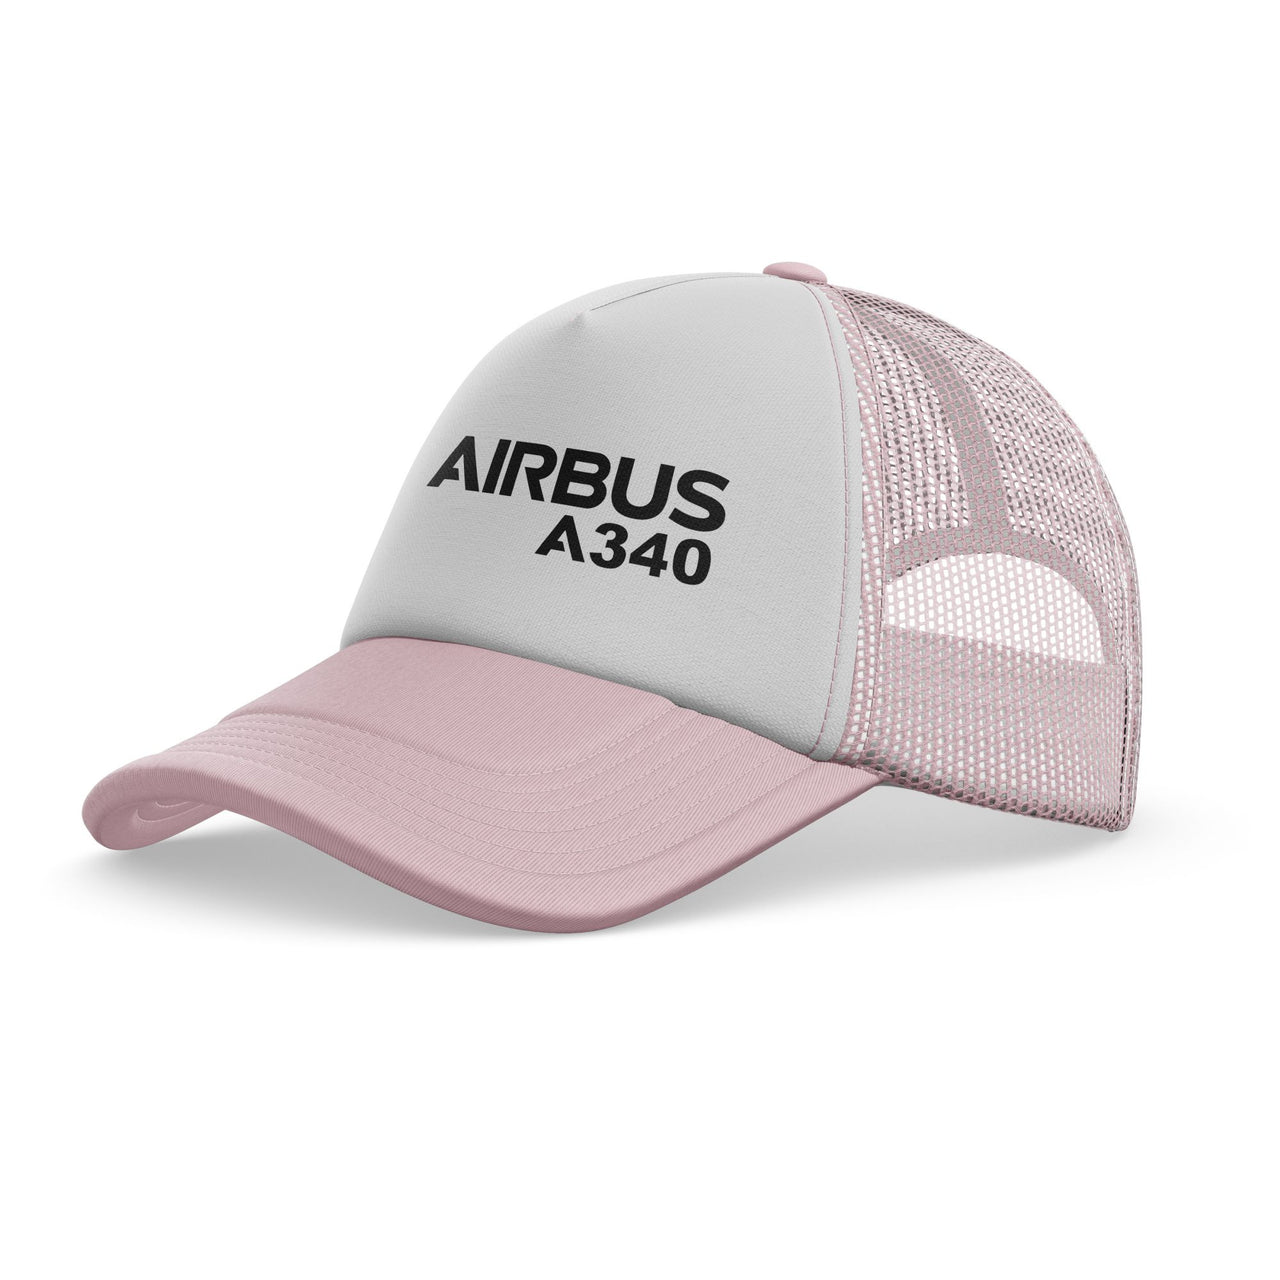 Airbus A340 & Text Designed Trucker Caps & Hats